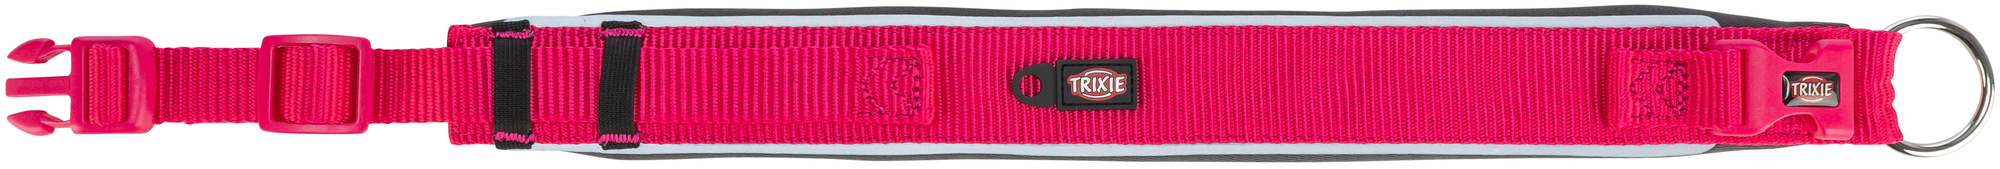 Trixie Premium collar extra grande - Fucsia/Gris Grafito